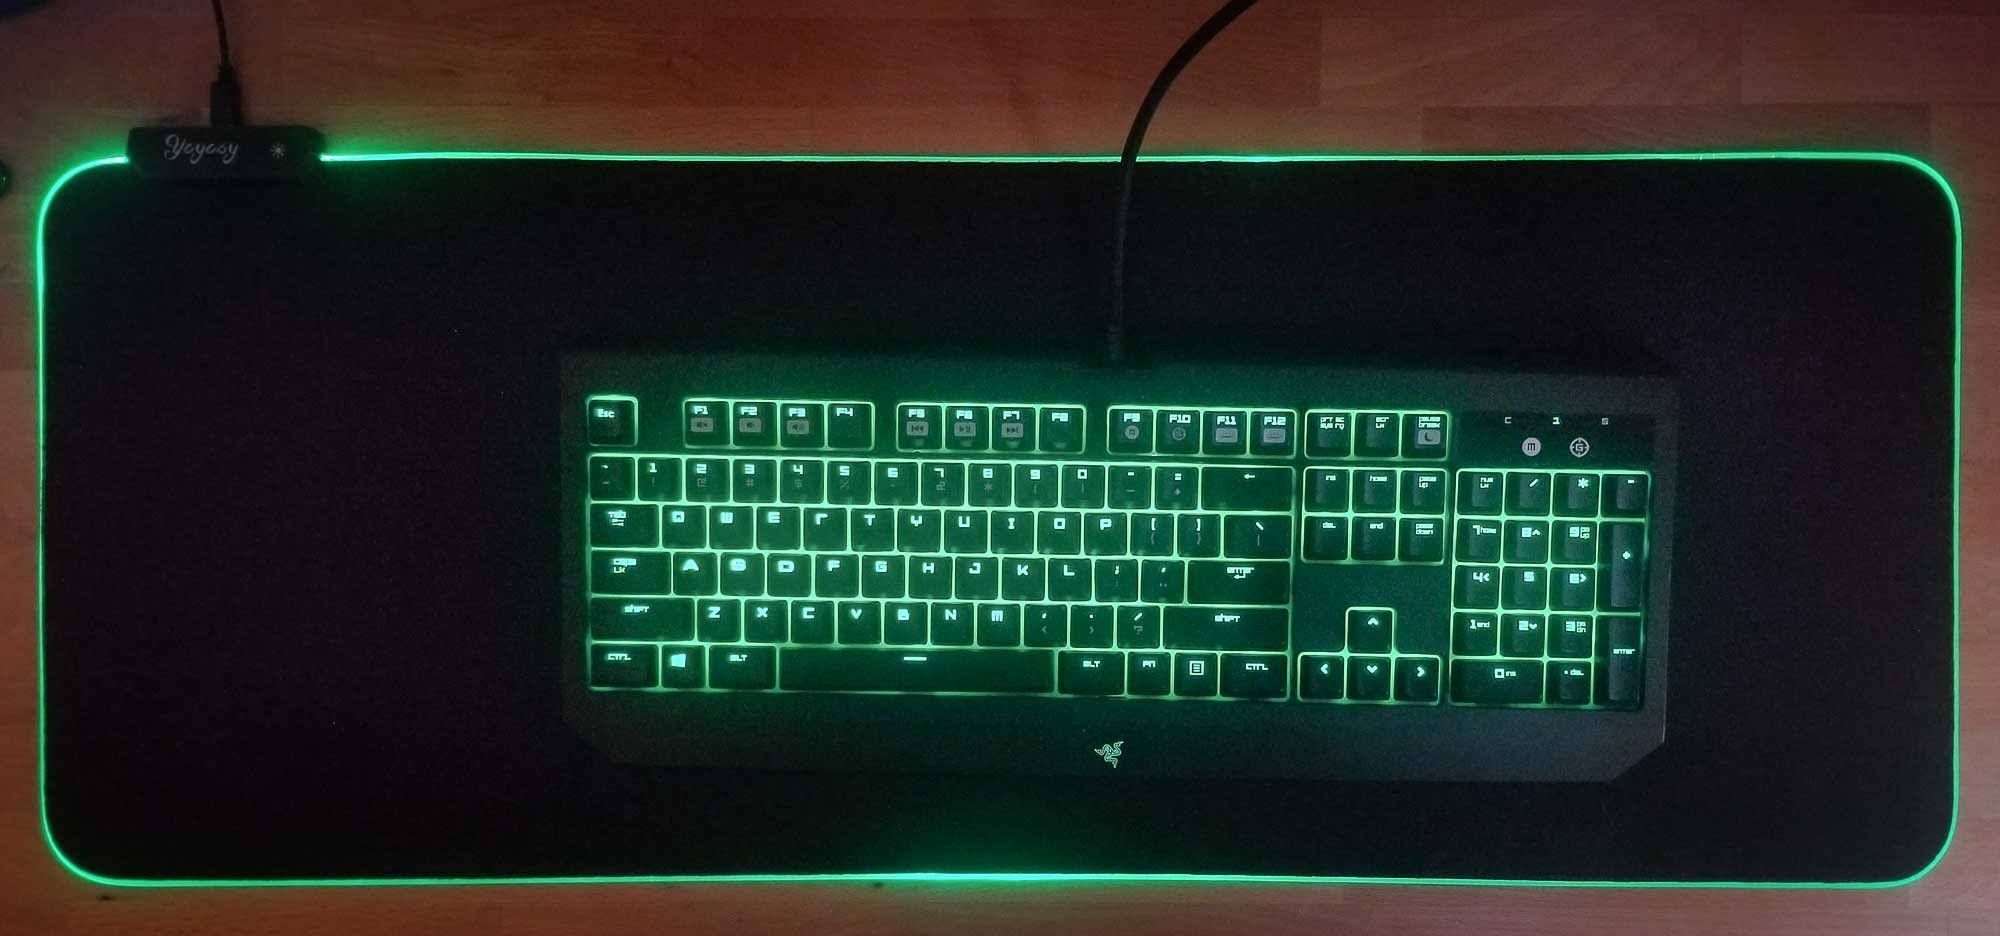 Mechanical Gaming Keyboard - Razer BlackWidow Ultimate Mechanical Gaming Keyboard 2016 Green LED